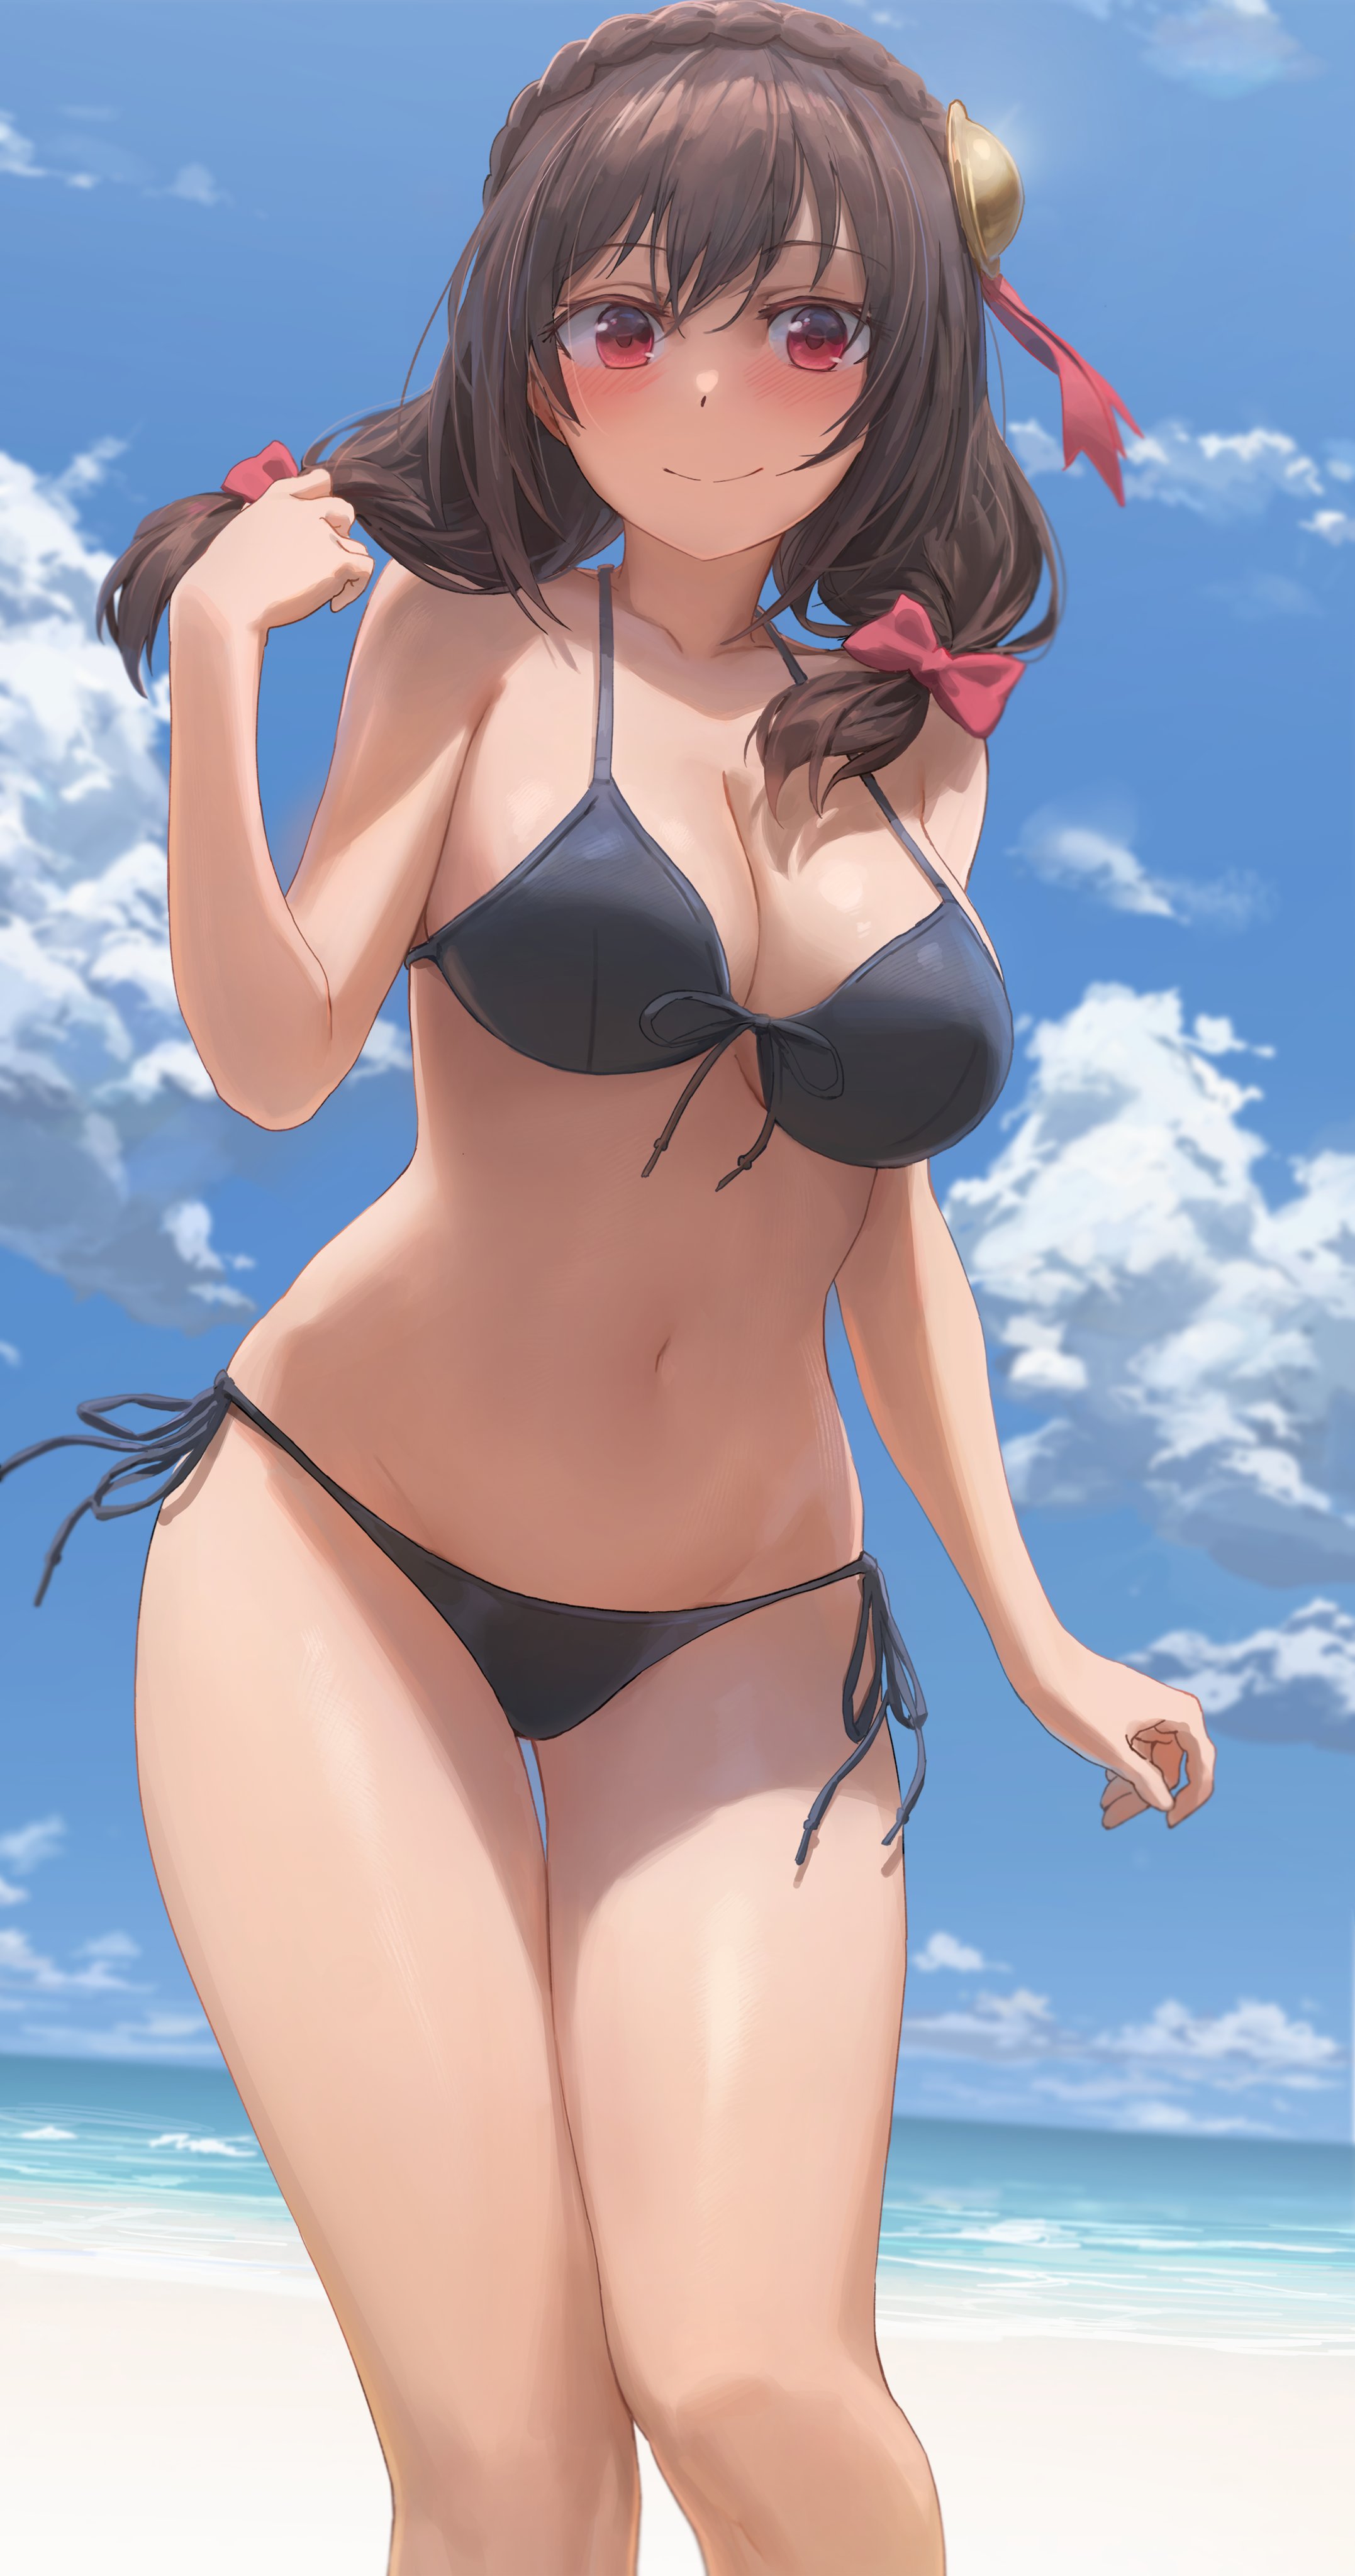 Anime 2154x4096 anime anime girls digital art artwork 2D portrait display Yohan1754 Kono Subarashii Sekai ni Shukufuku wo! Yunyun (Konosuba) beach bikini cleavage brunette red eyes smiling twintails looking at viewer